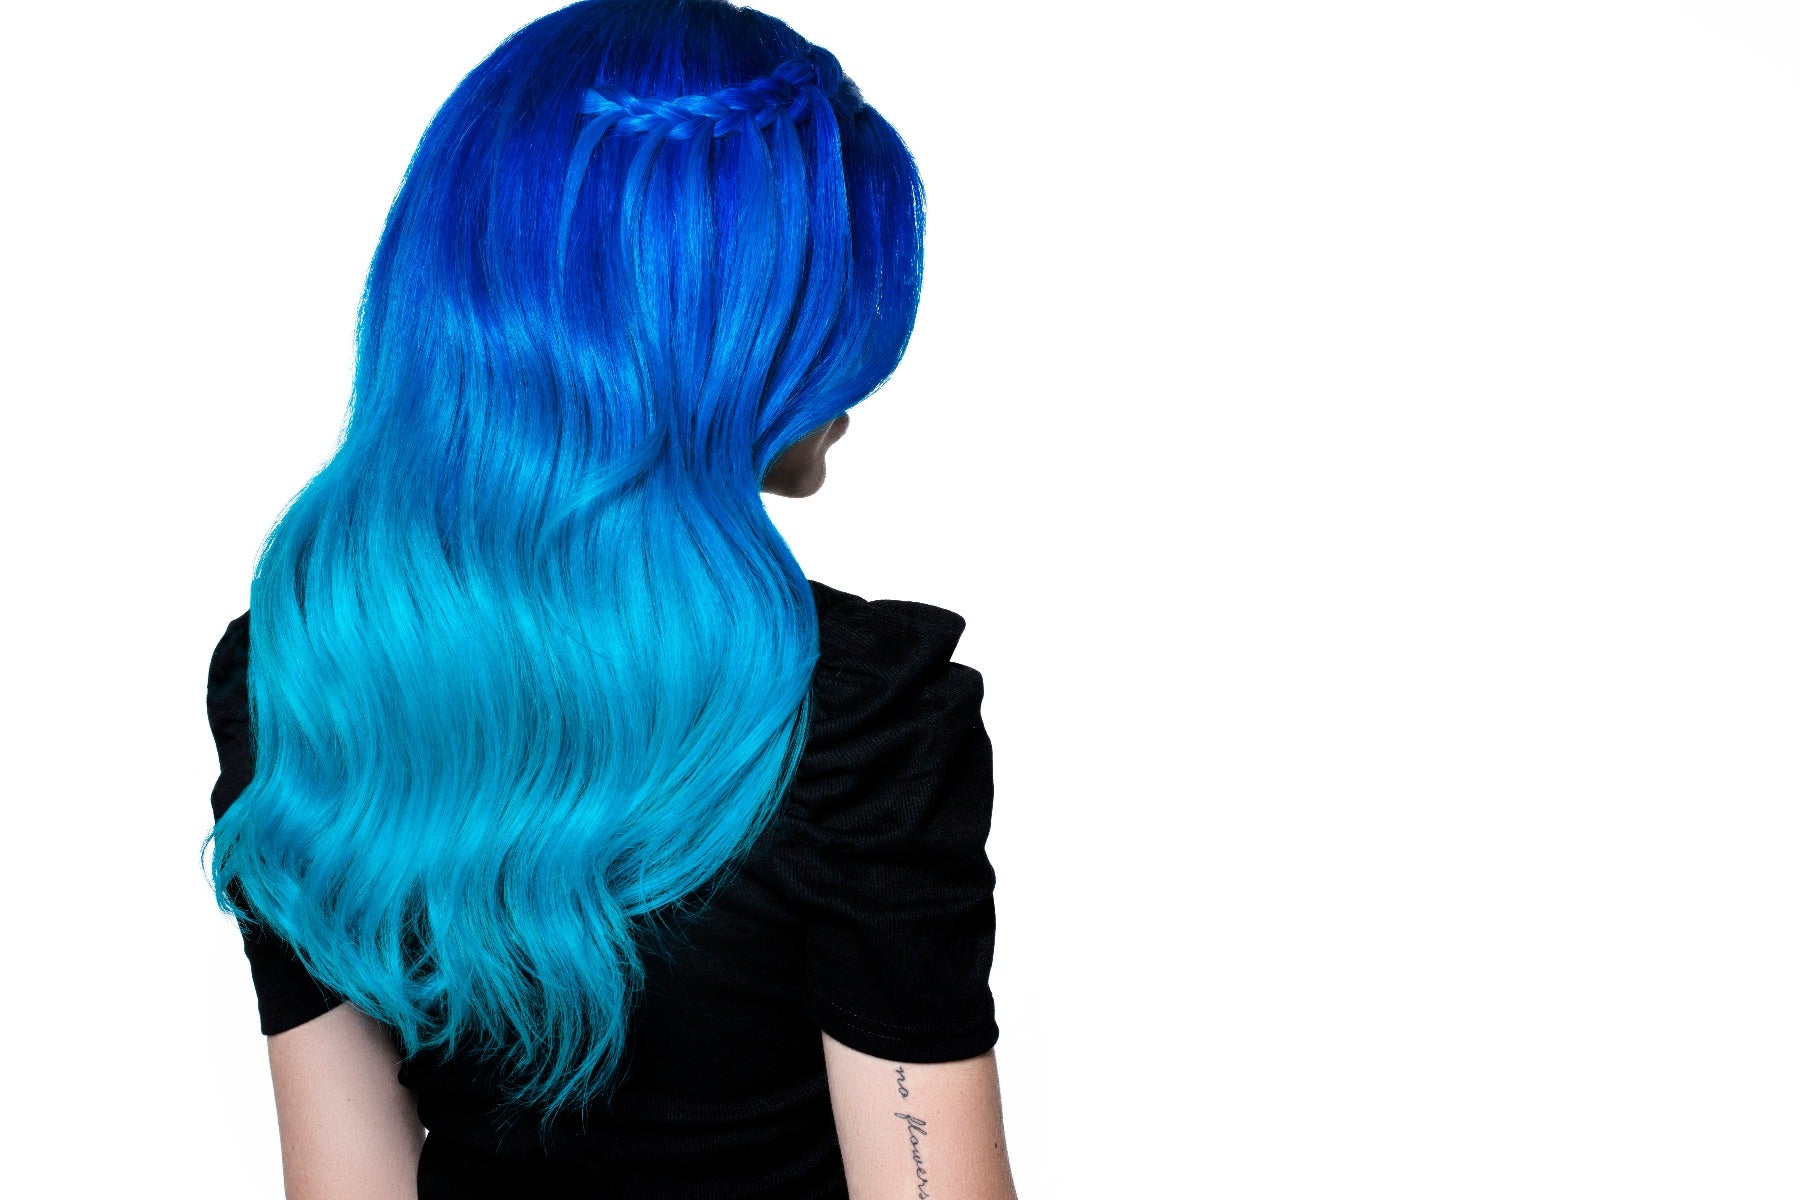 Splat Hair Dye Ombre Ocean Blue Hair Dye Vegan Semi-Permanent Kit with Bleach